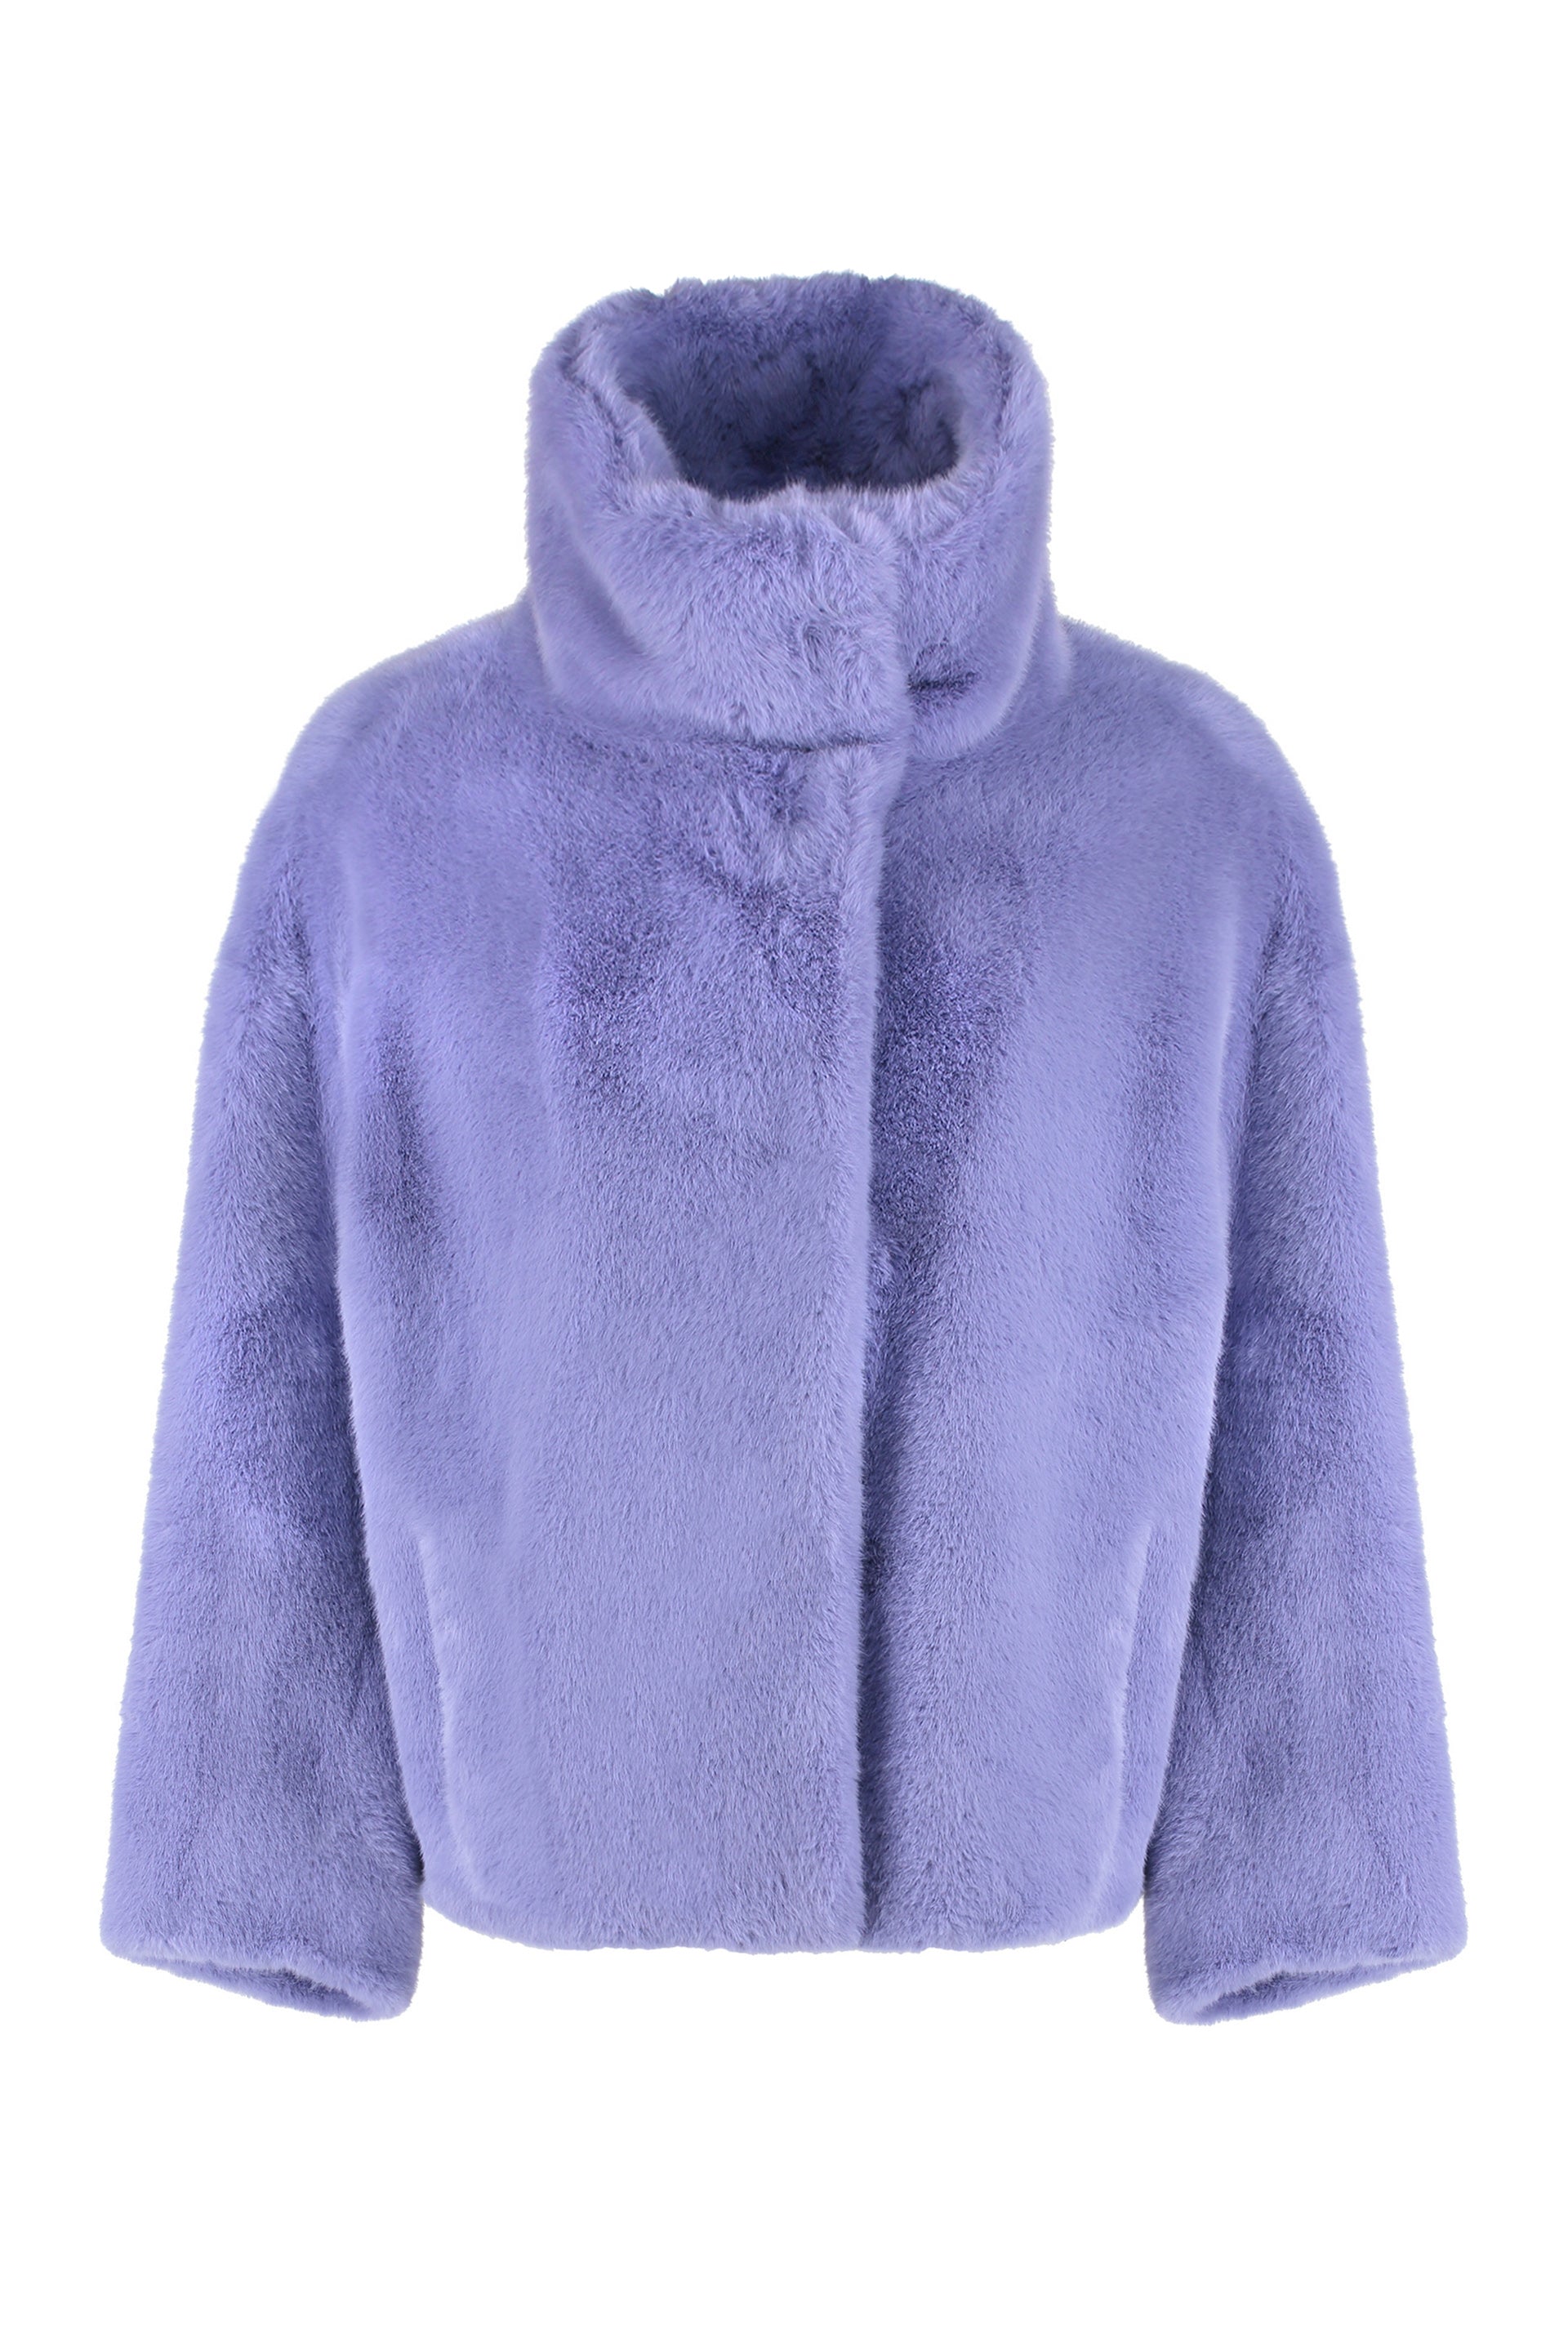 Stand Studio - Zendaya faux fur coat purple - The Corner